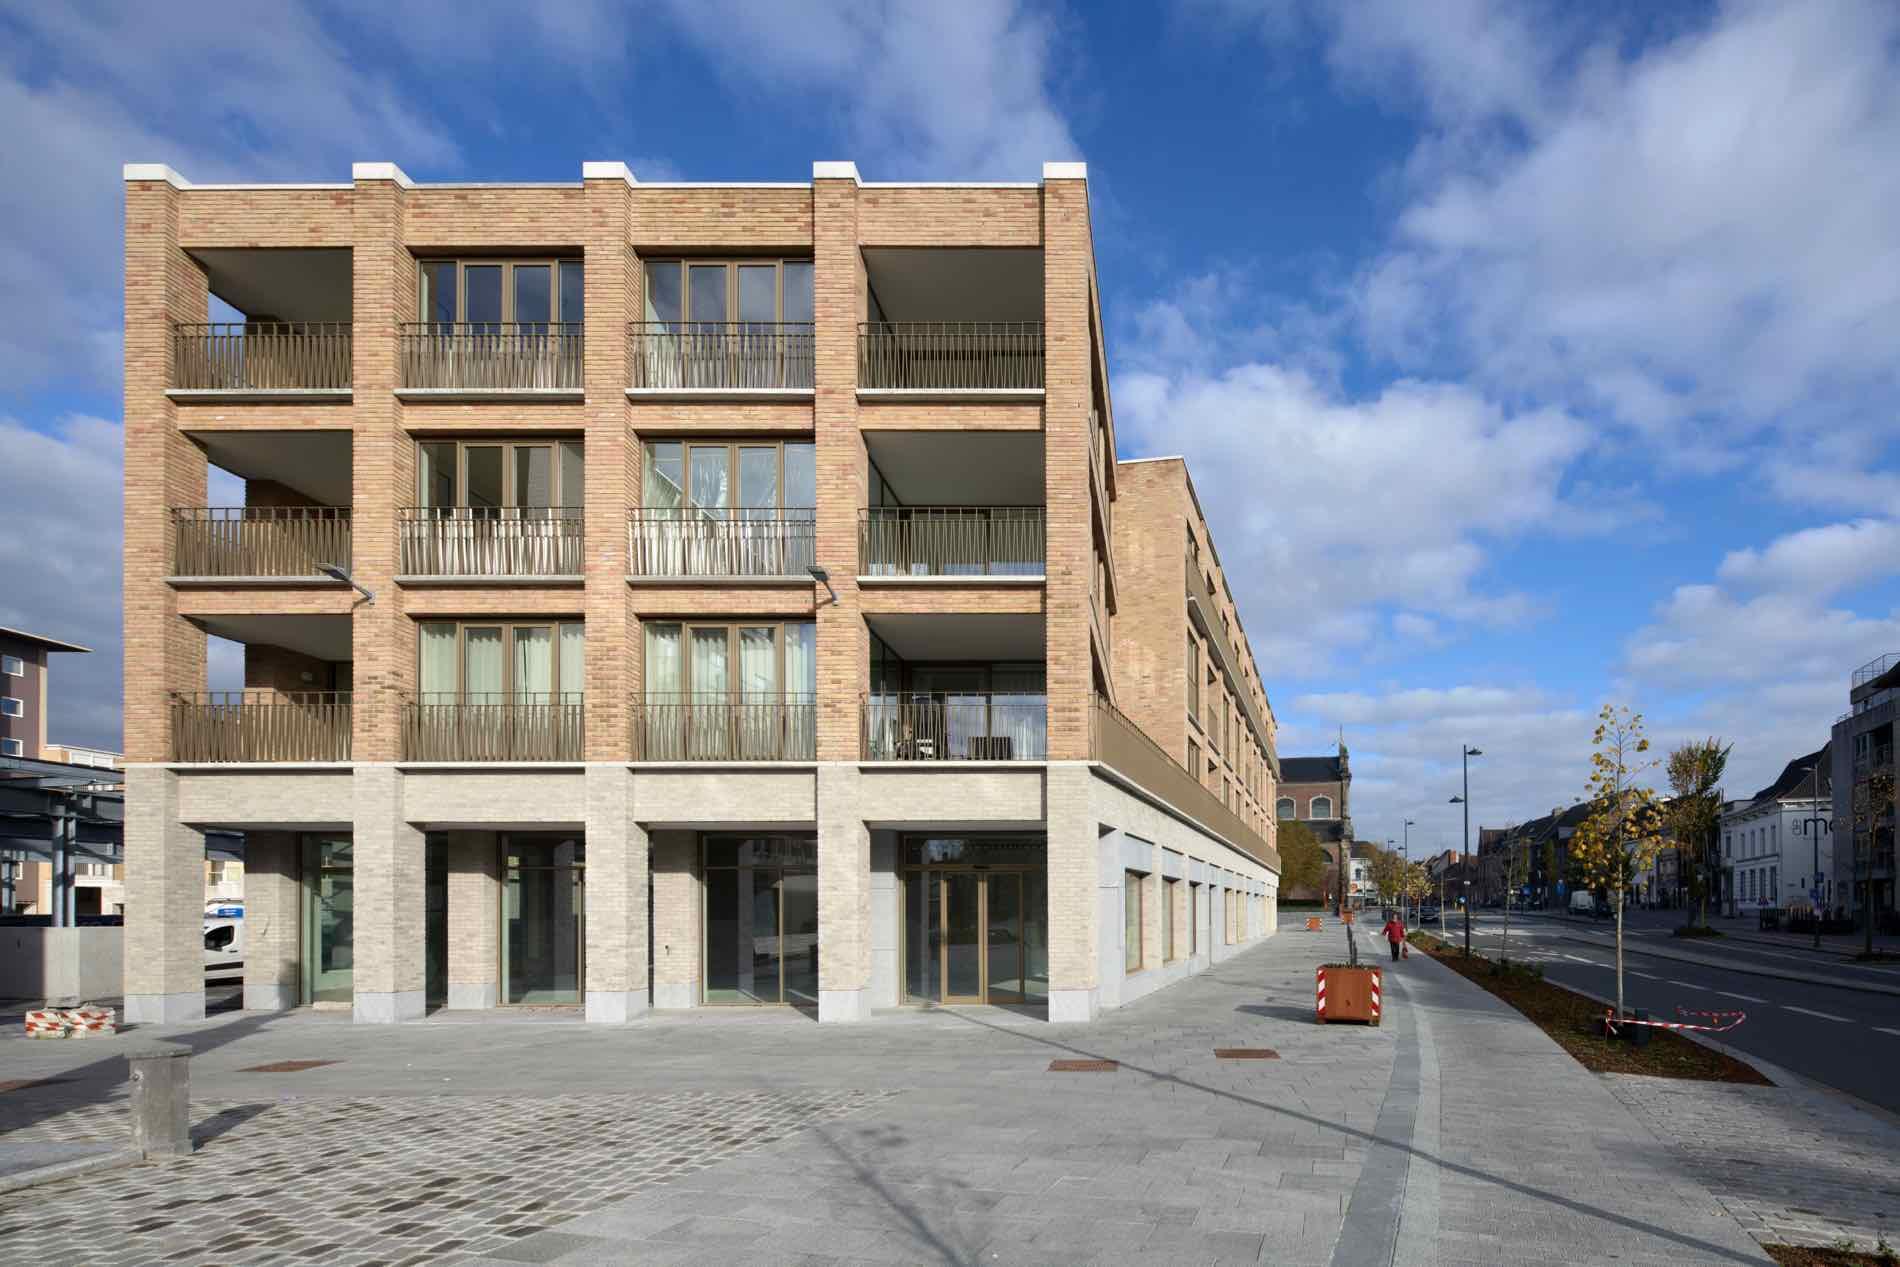 Appartementen Harelbeke (B) 2 - Geurst & Schulze architecten